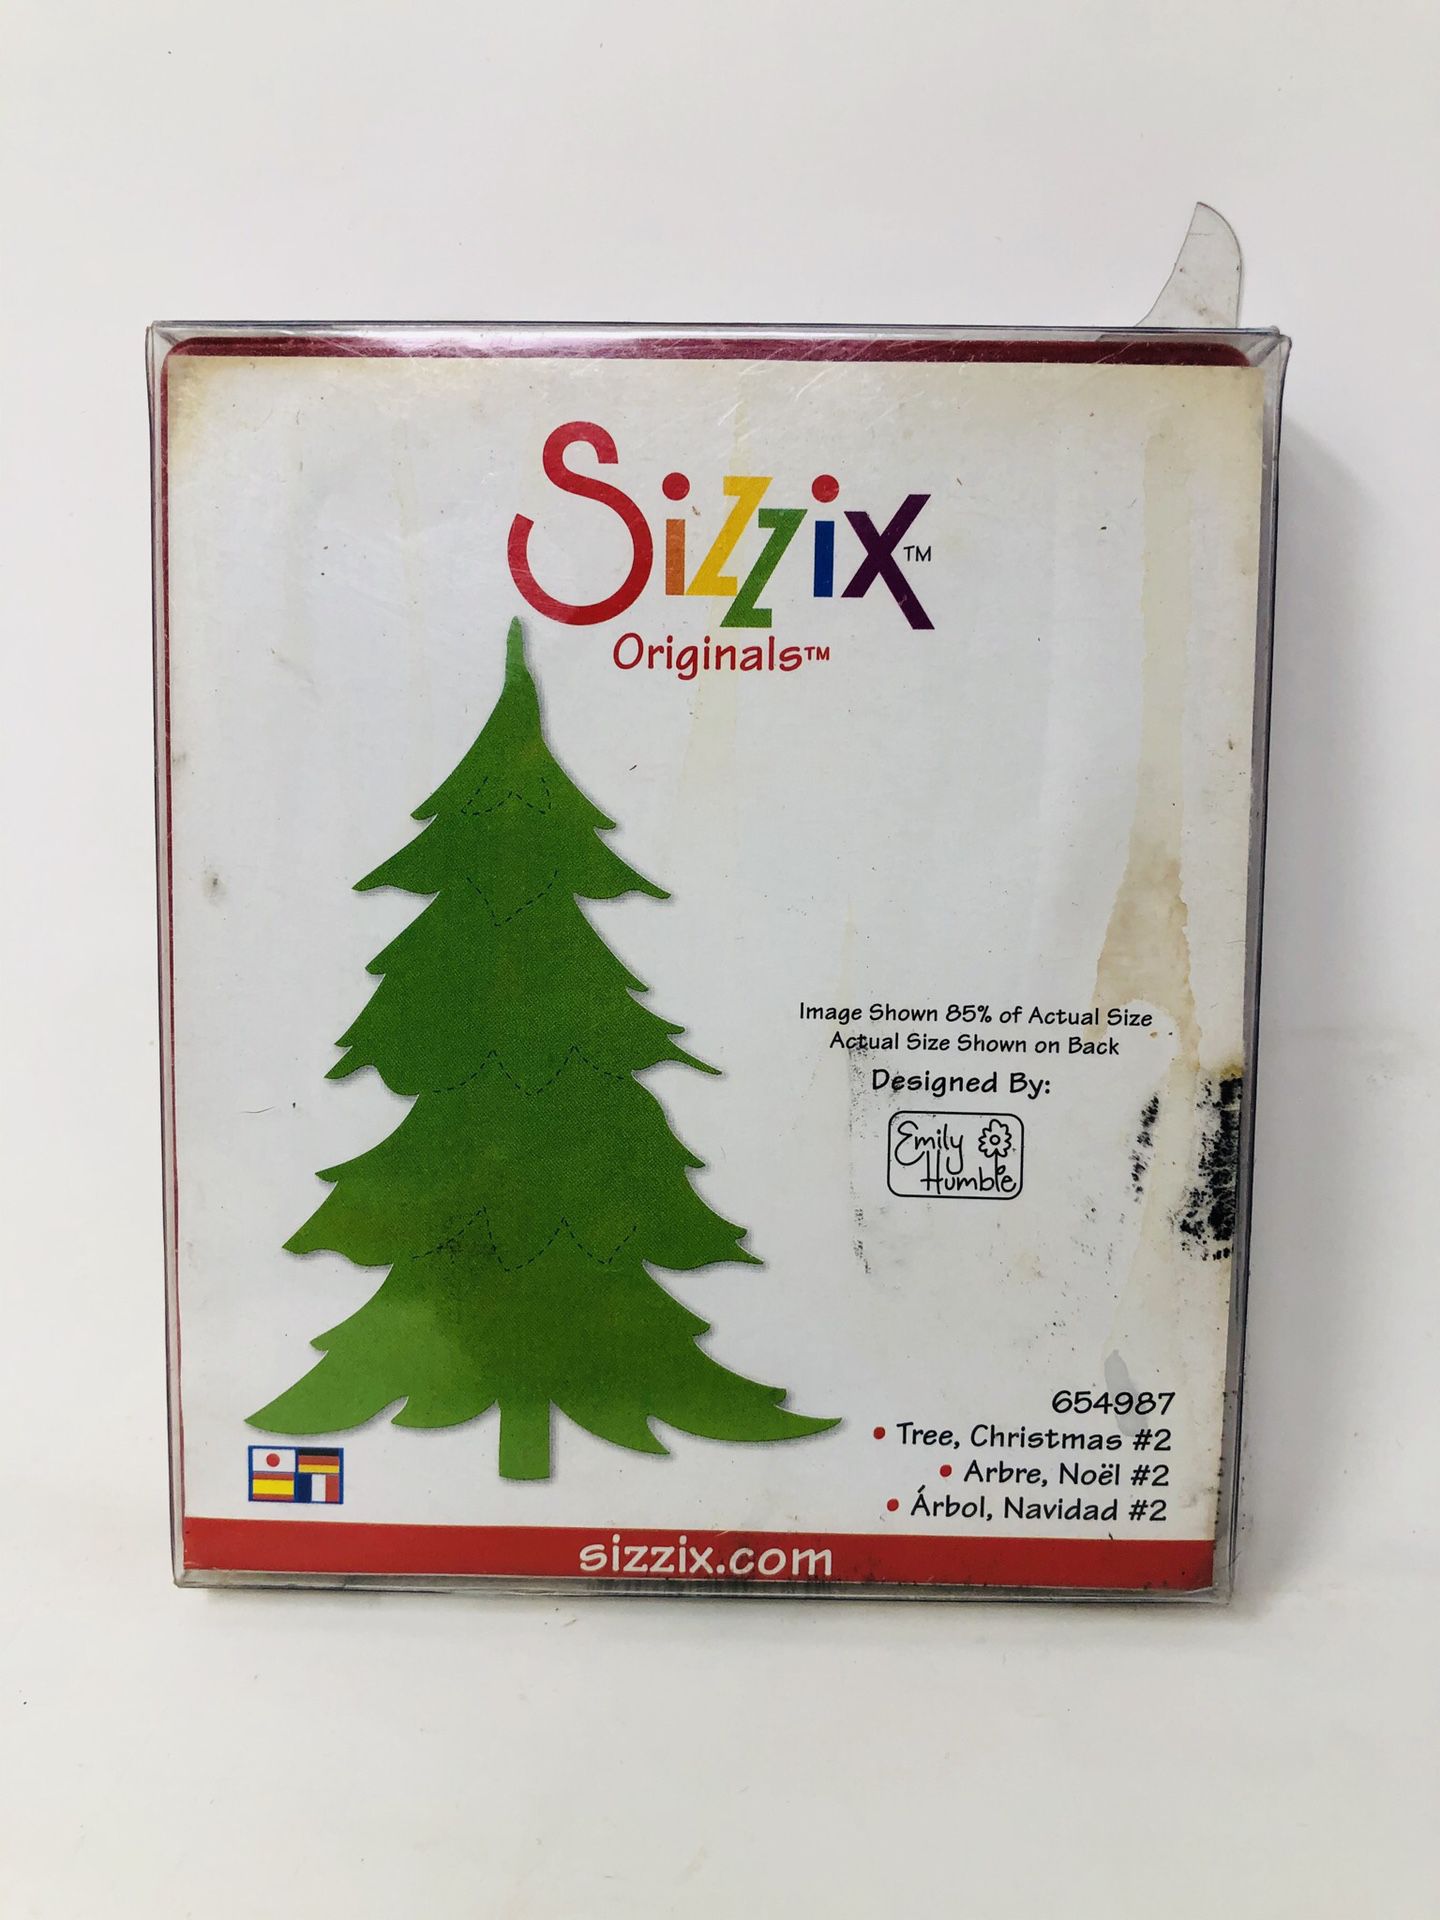 Sizzix tree Christmas #2